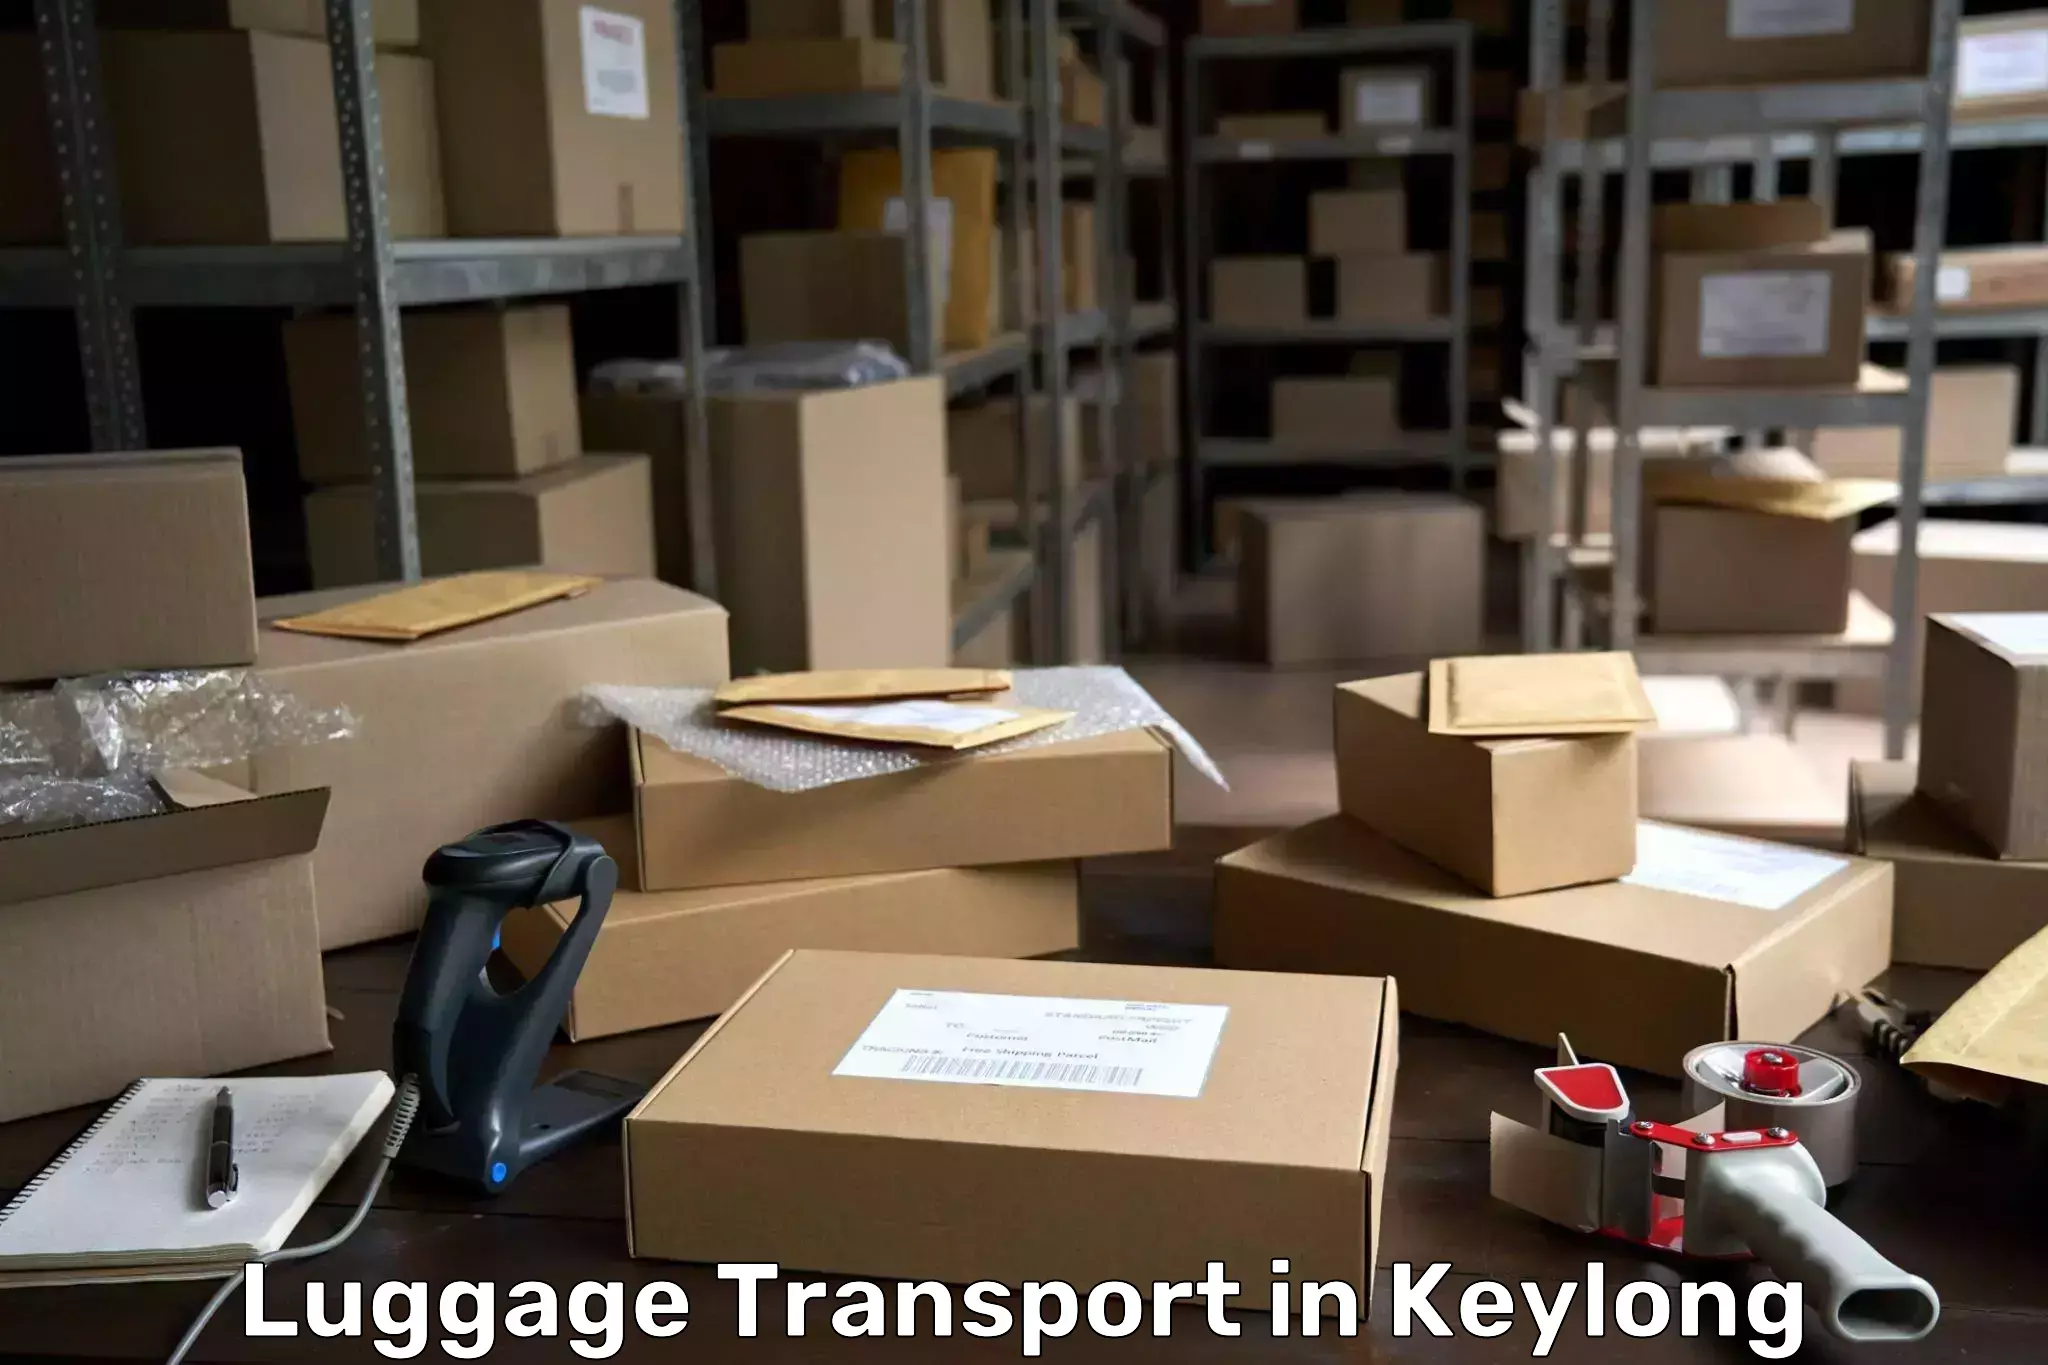 Multi-destination luggage transport in Keylong